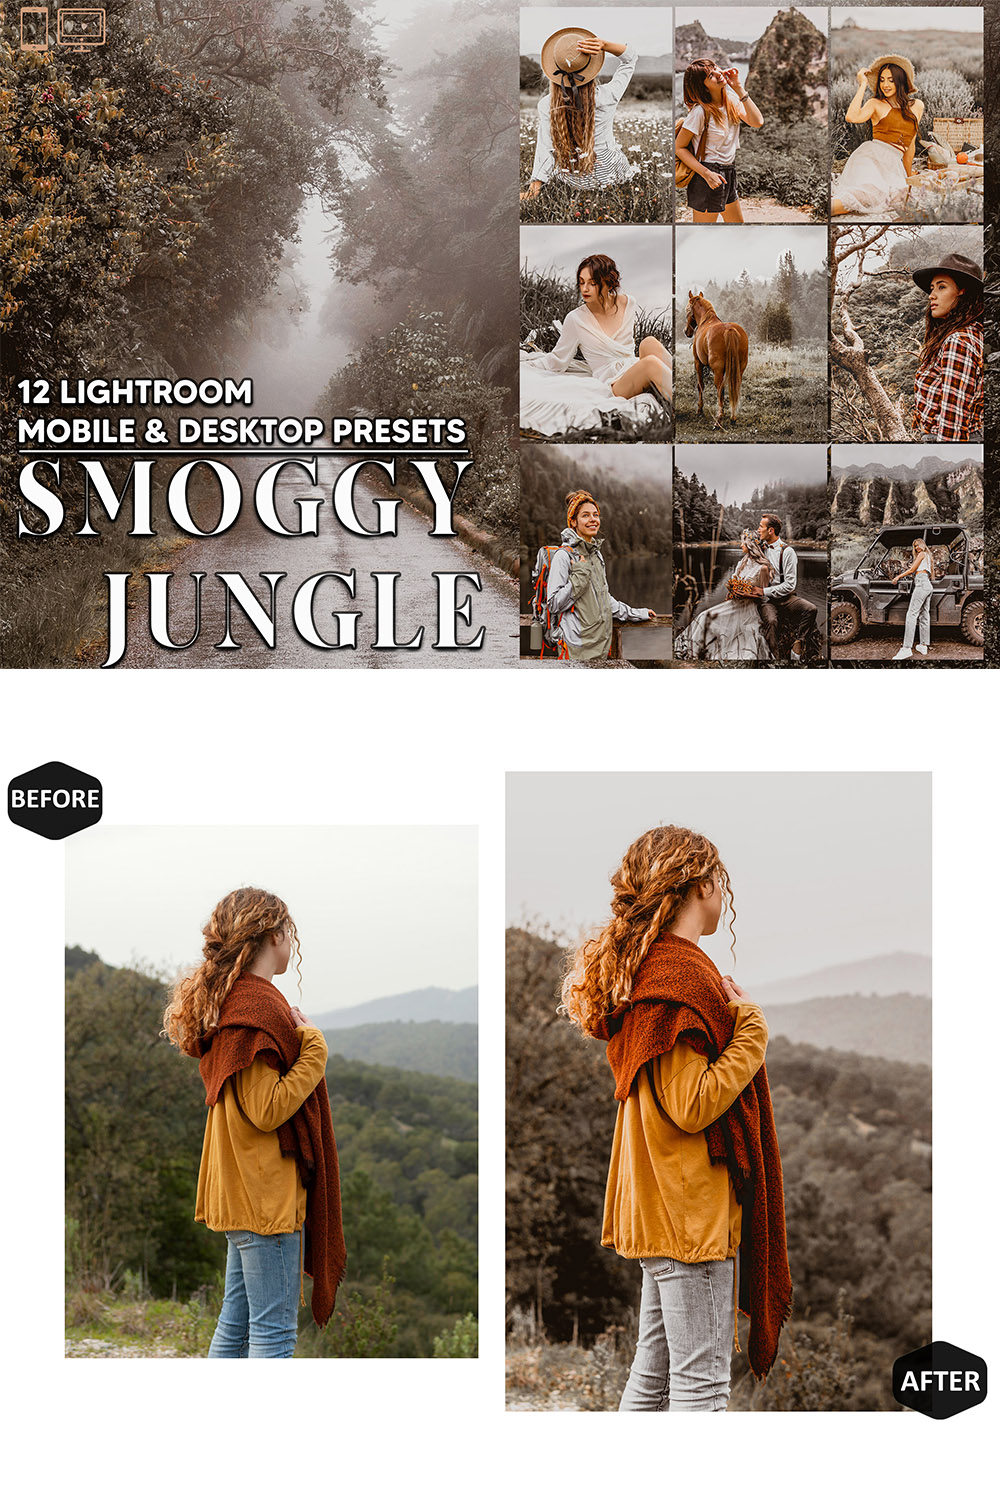 12 Smoggy Jungle Lightroom Presets, Foggy Mobile Preset, Forest Moody Desktop LR Filter Lifestyle Theme For Blogger Portrait Instagram pinterest preview image.